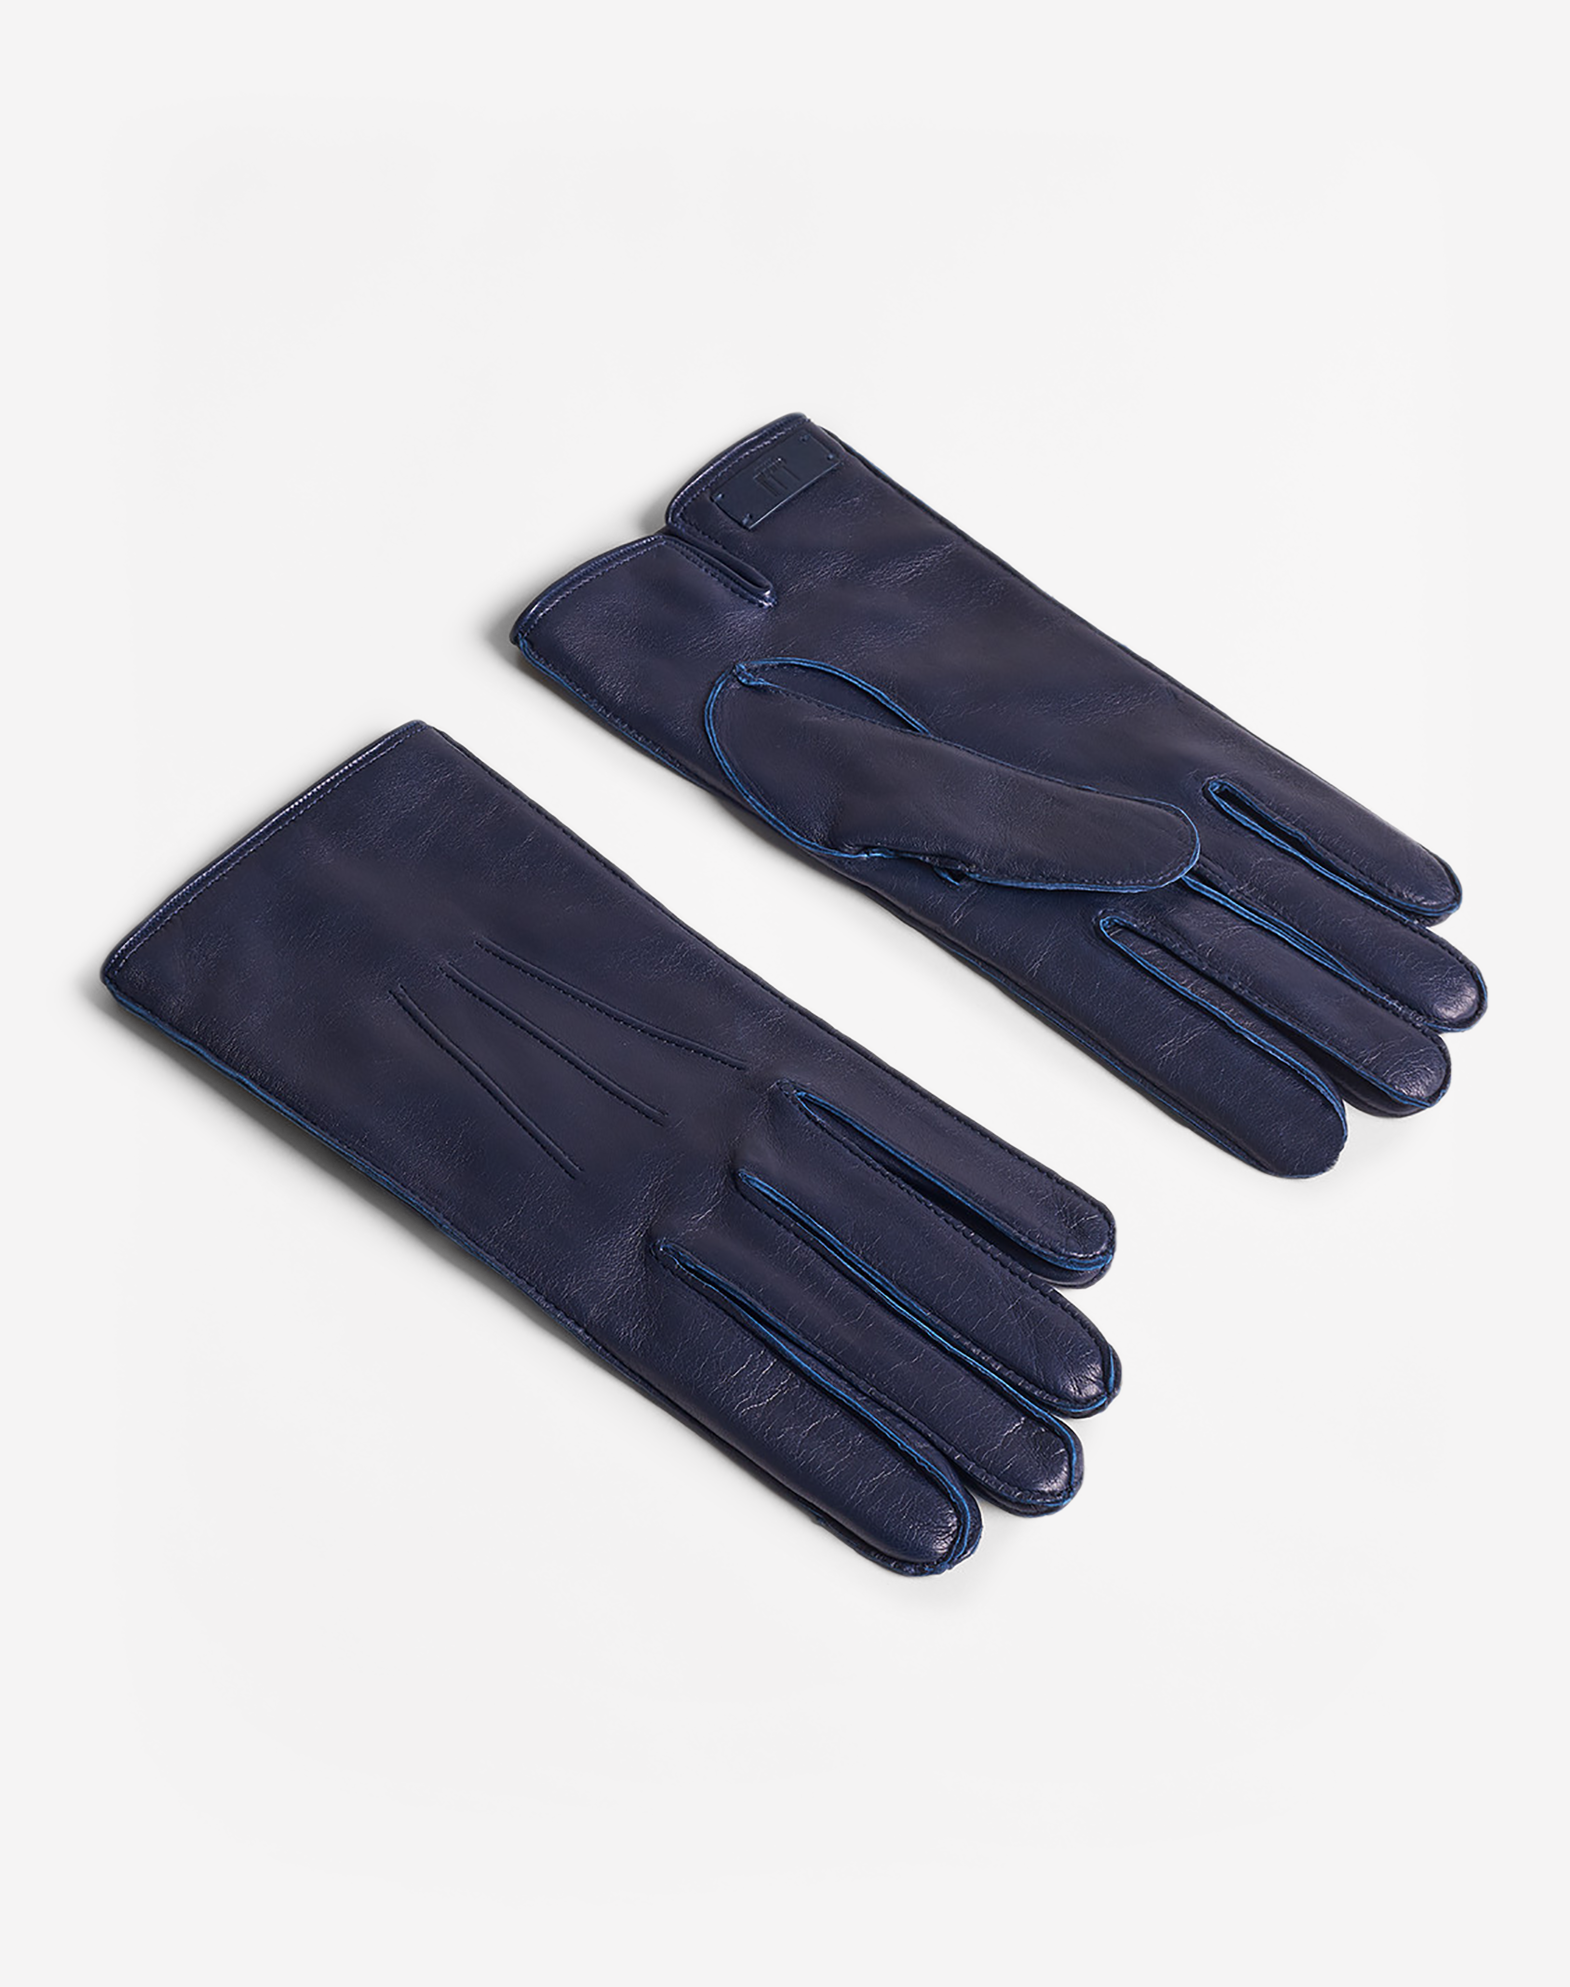 Dunhill Luxury Men's Gloves